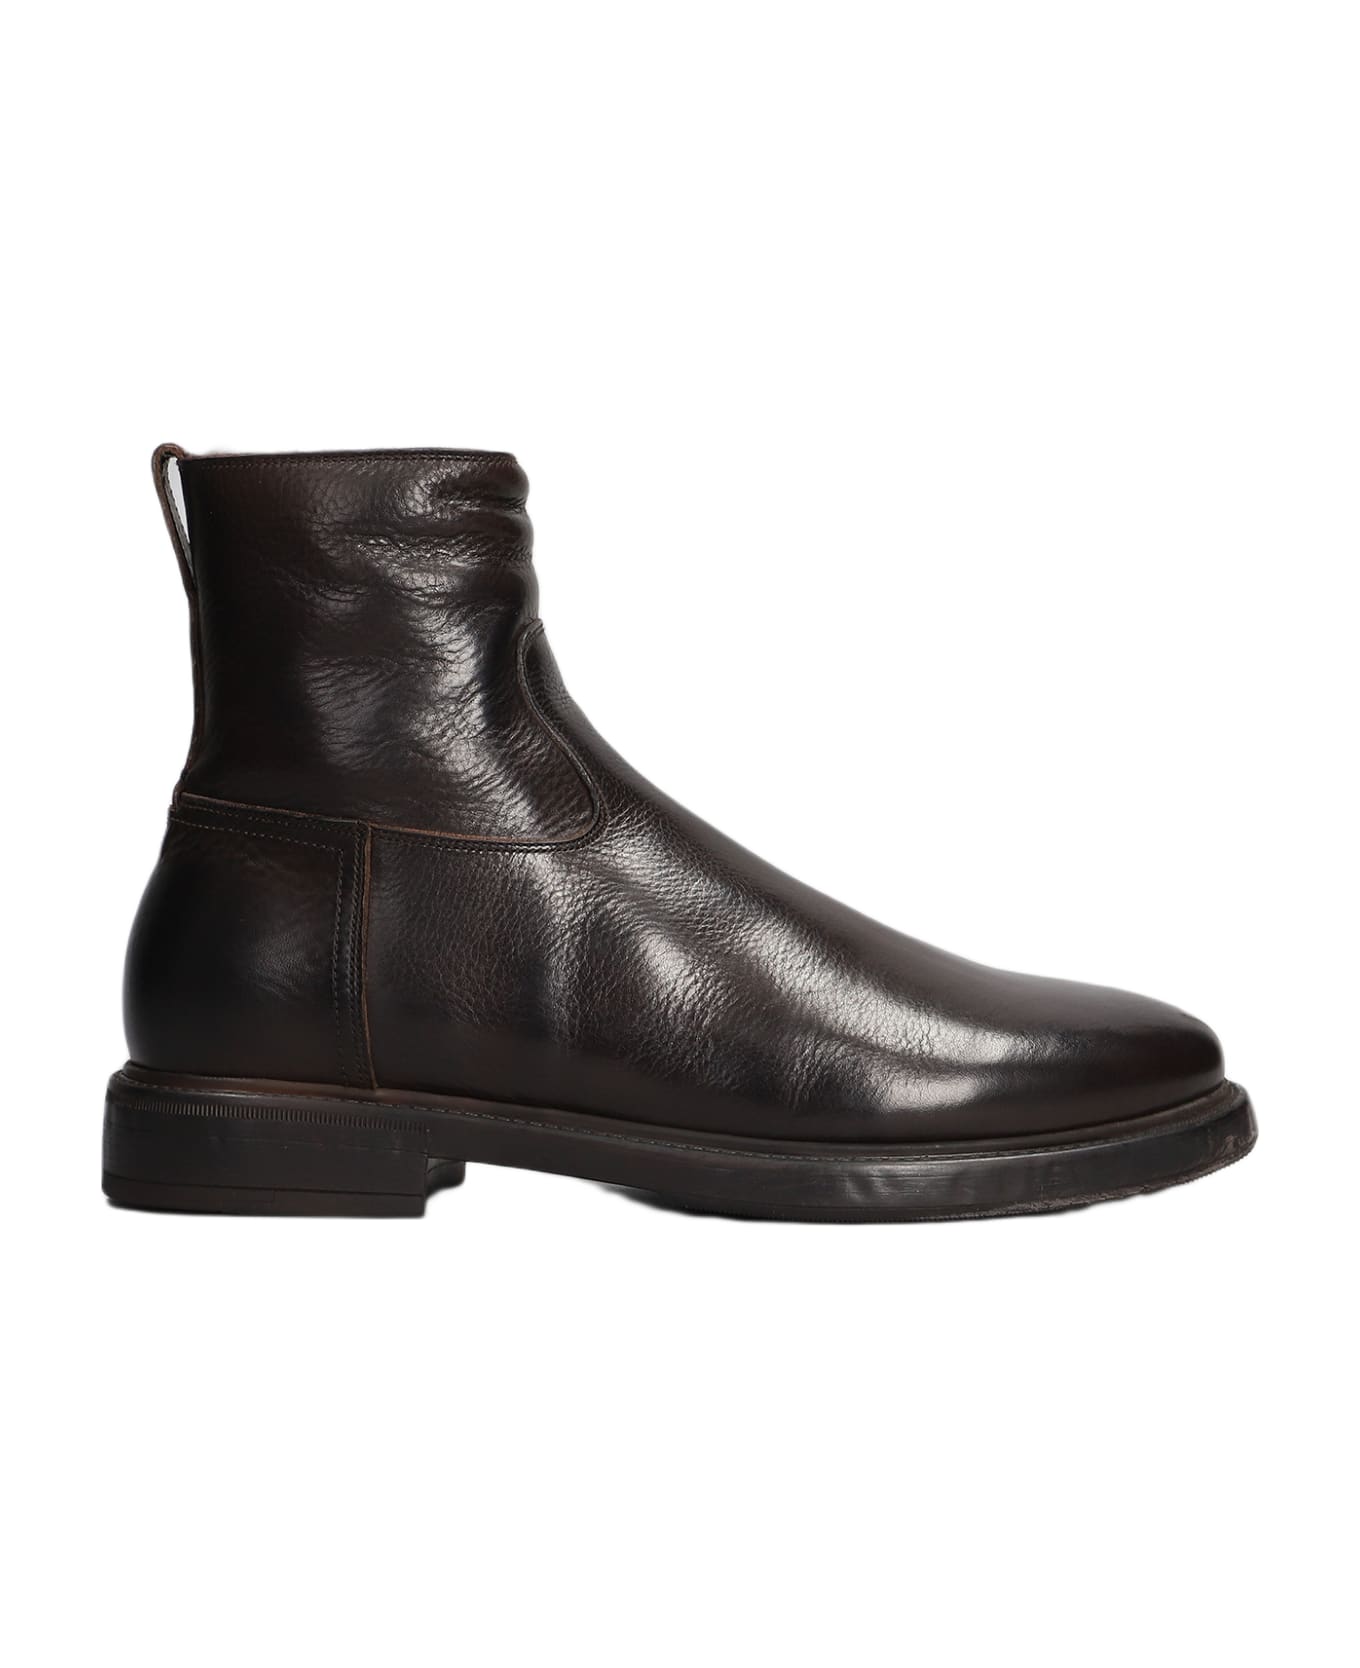 Silvano Sassetti Low Heels Ankle Boots In Dark Brown Leather - dark brown